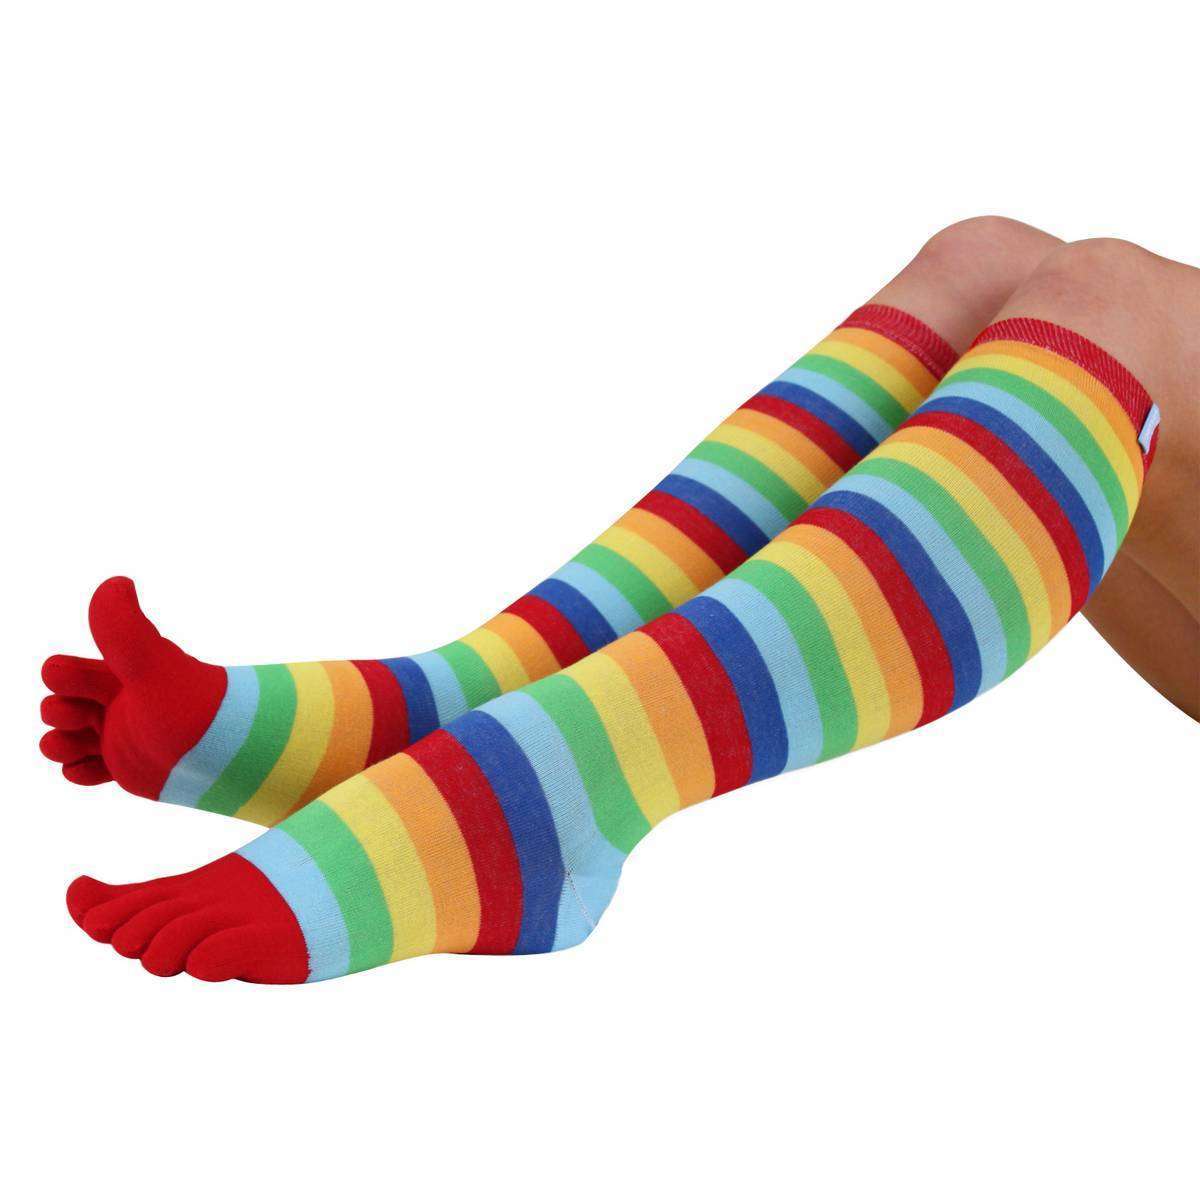 TOETOE® Socks - Over-Knee Toe Socks Forest Unisize